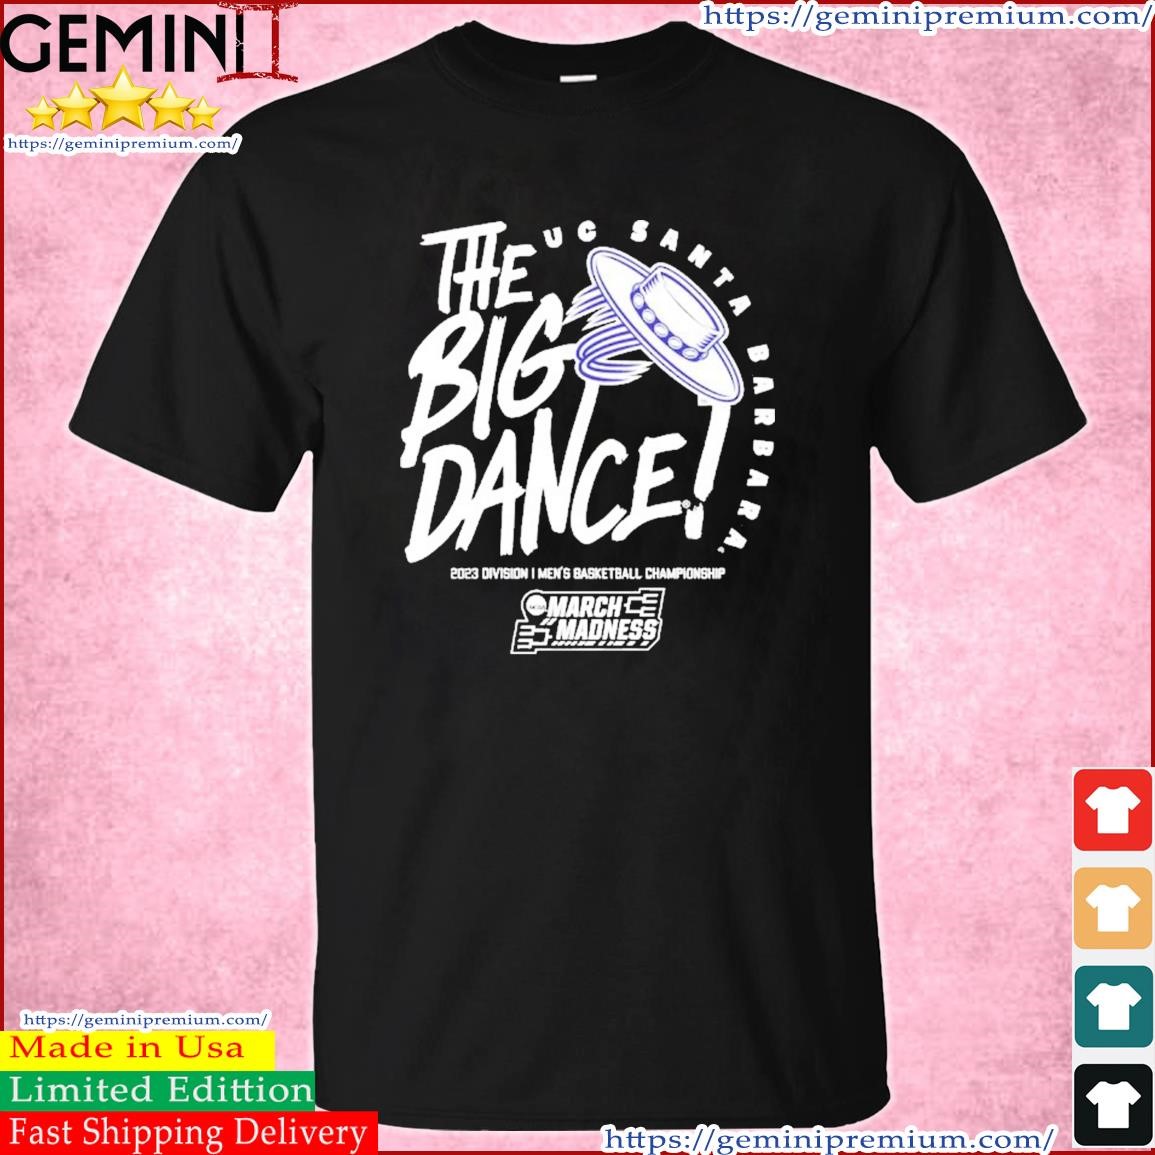 The Big Dance March Madness 2023 Uc Santa Barbara Men's Basketball Shirt